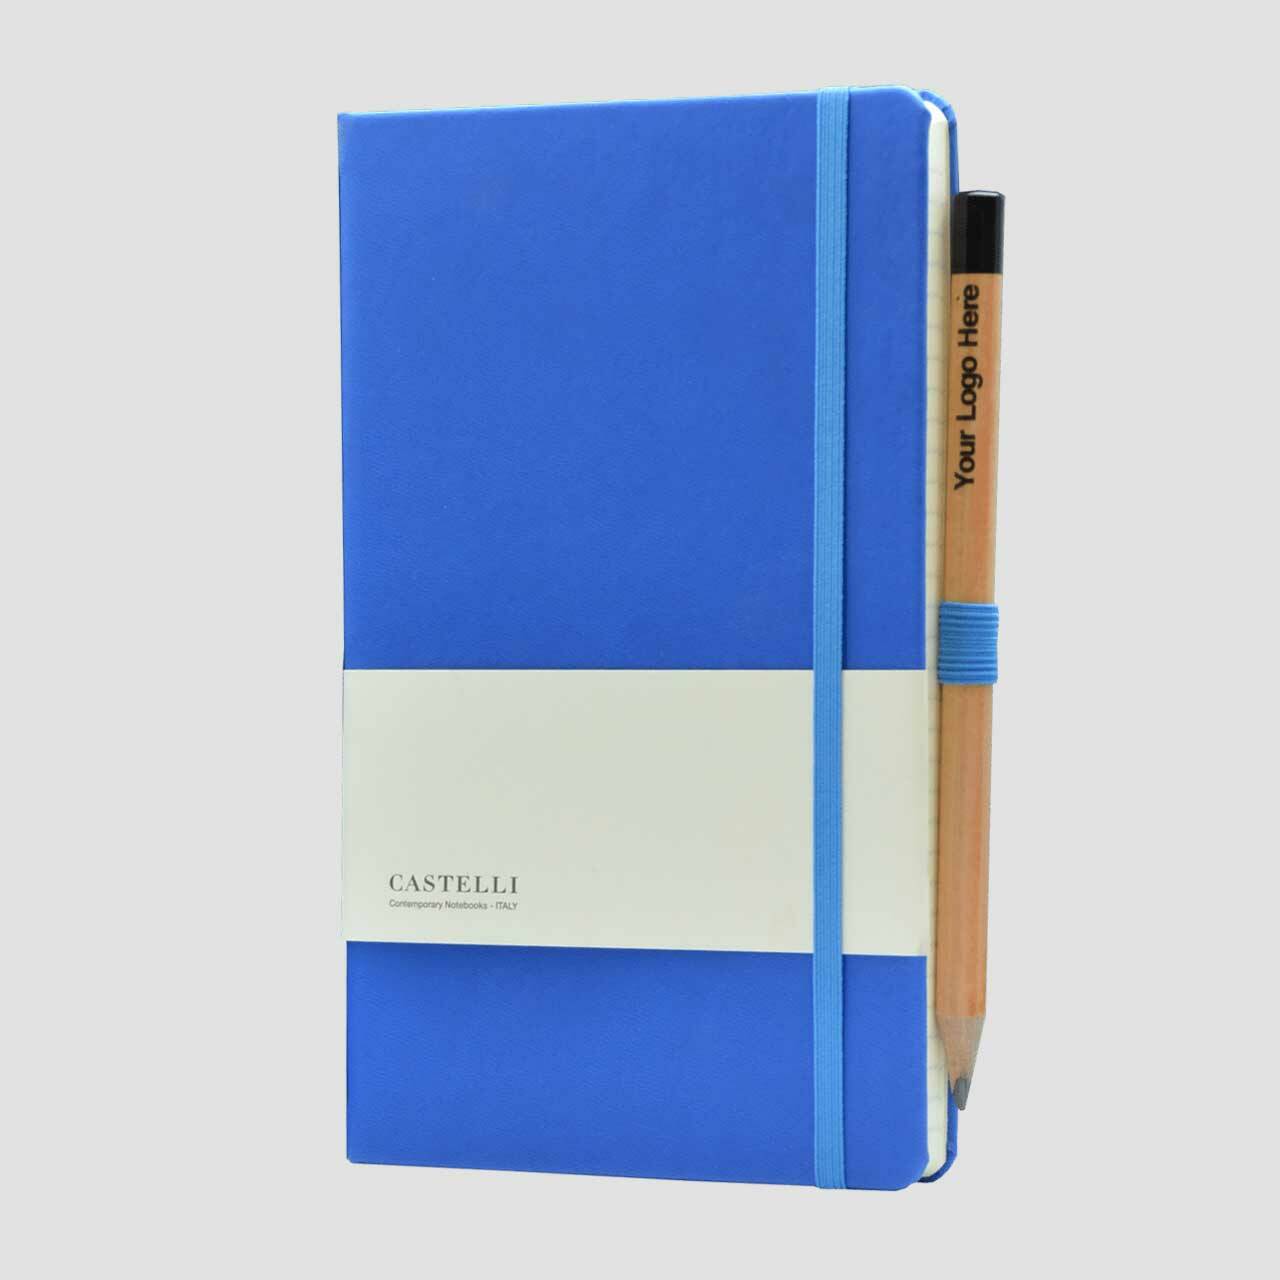 Castelli notitieboek soft touch met banderol en potlood met houder, kobalt blauw